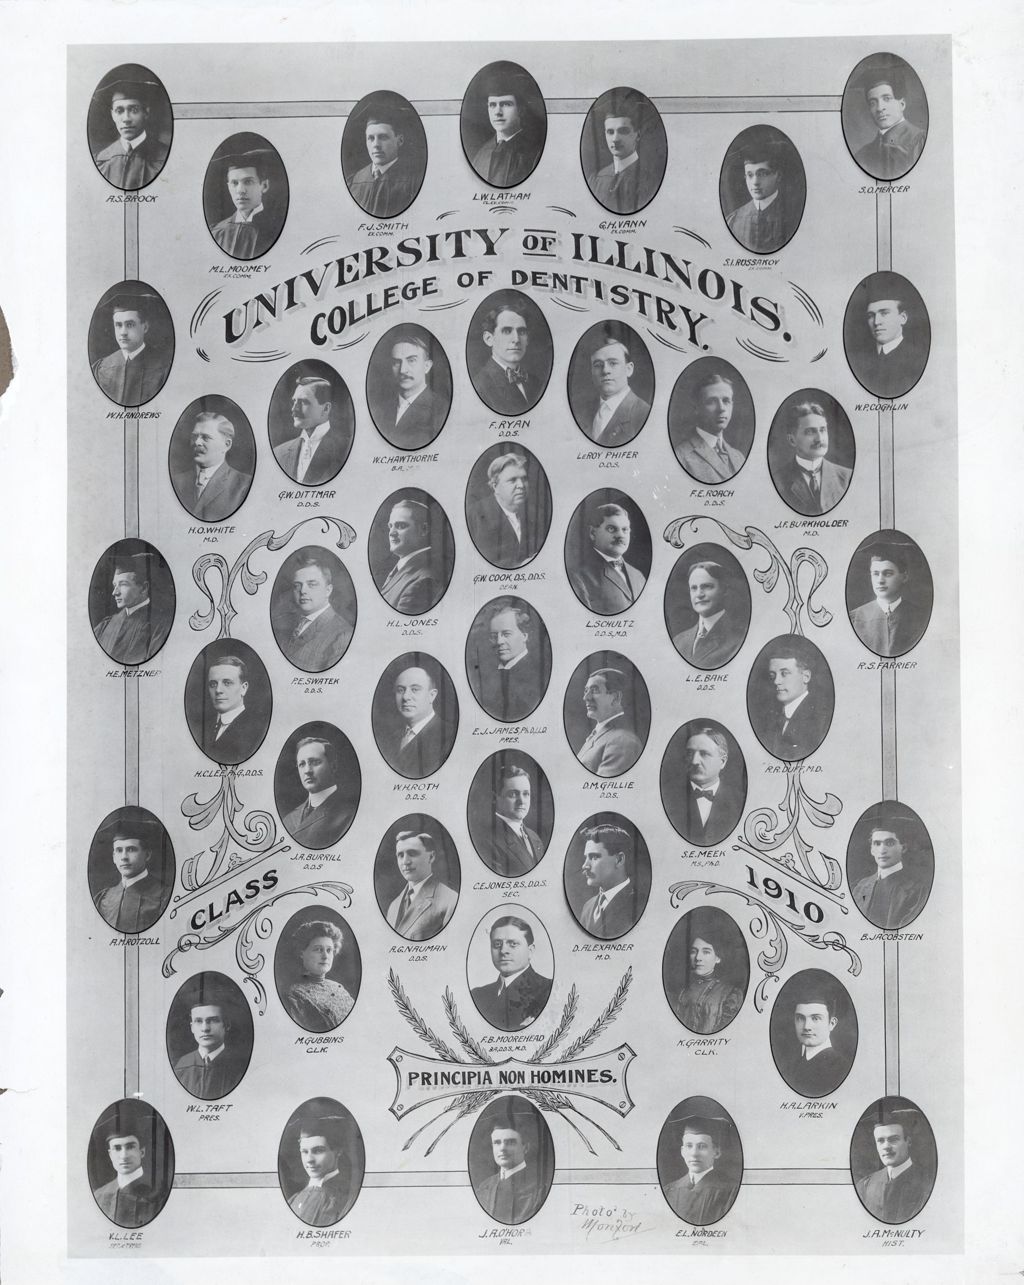 1910 graduating class, University of Illinois College of Dentistry